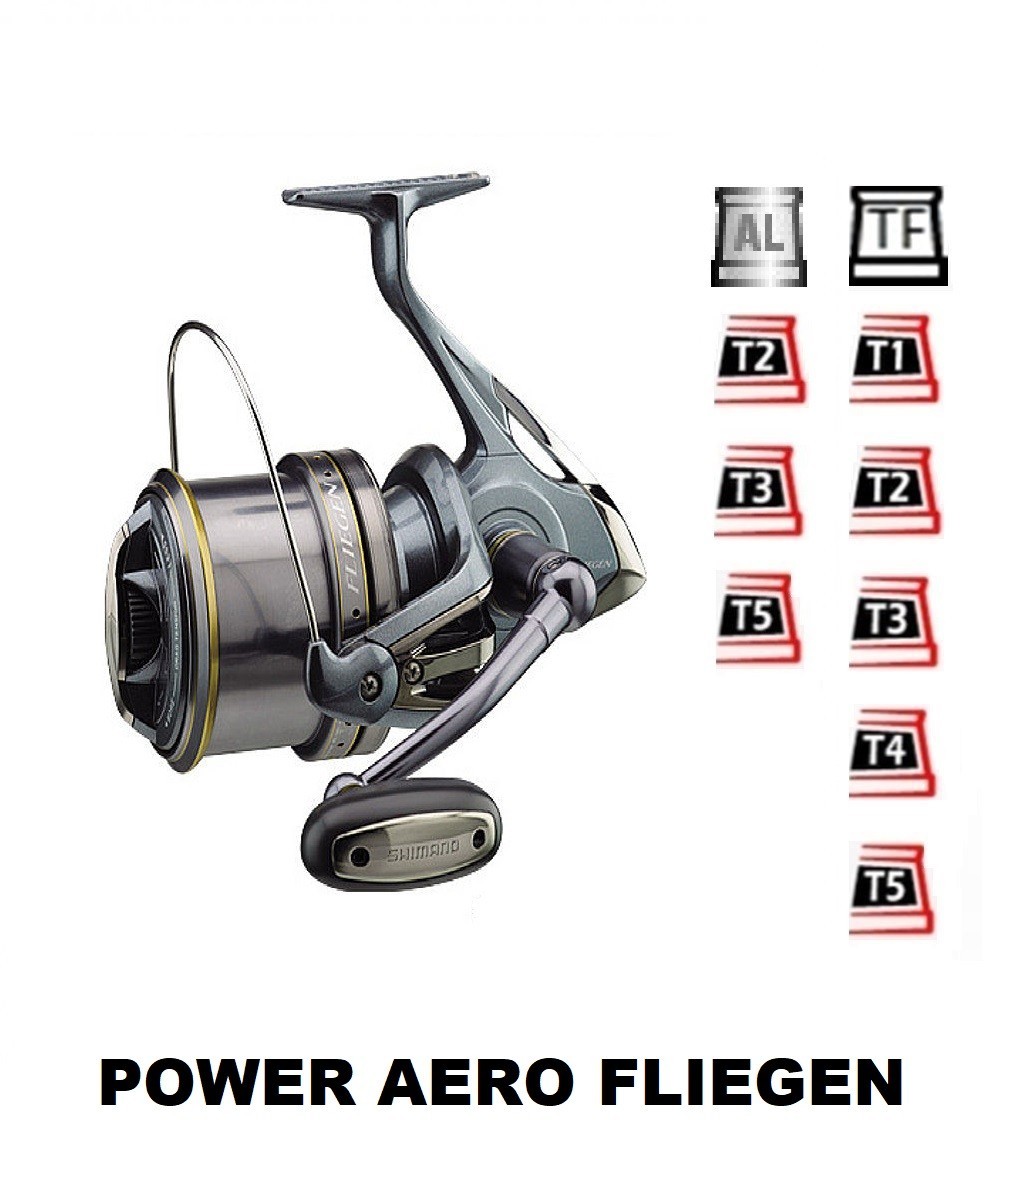 Power Aero Fliegen